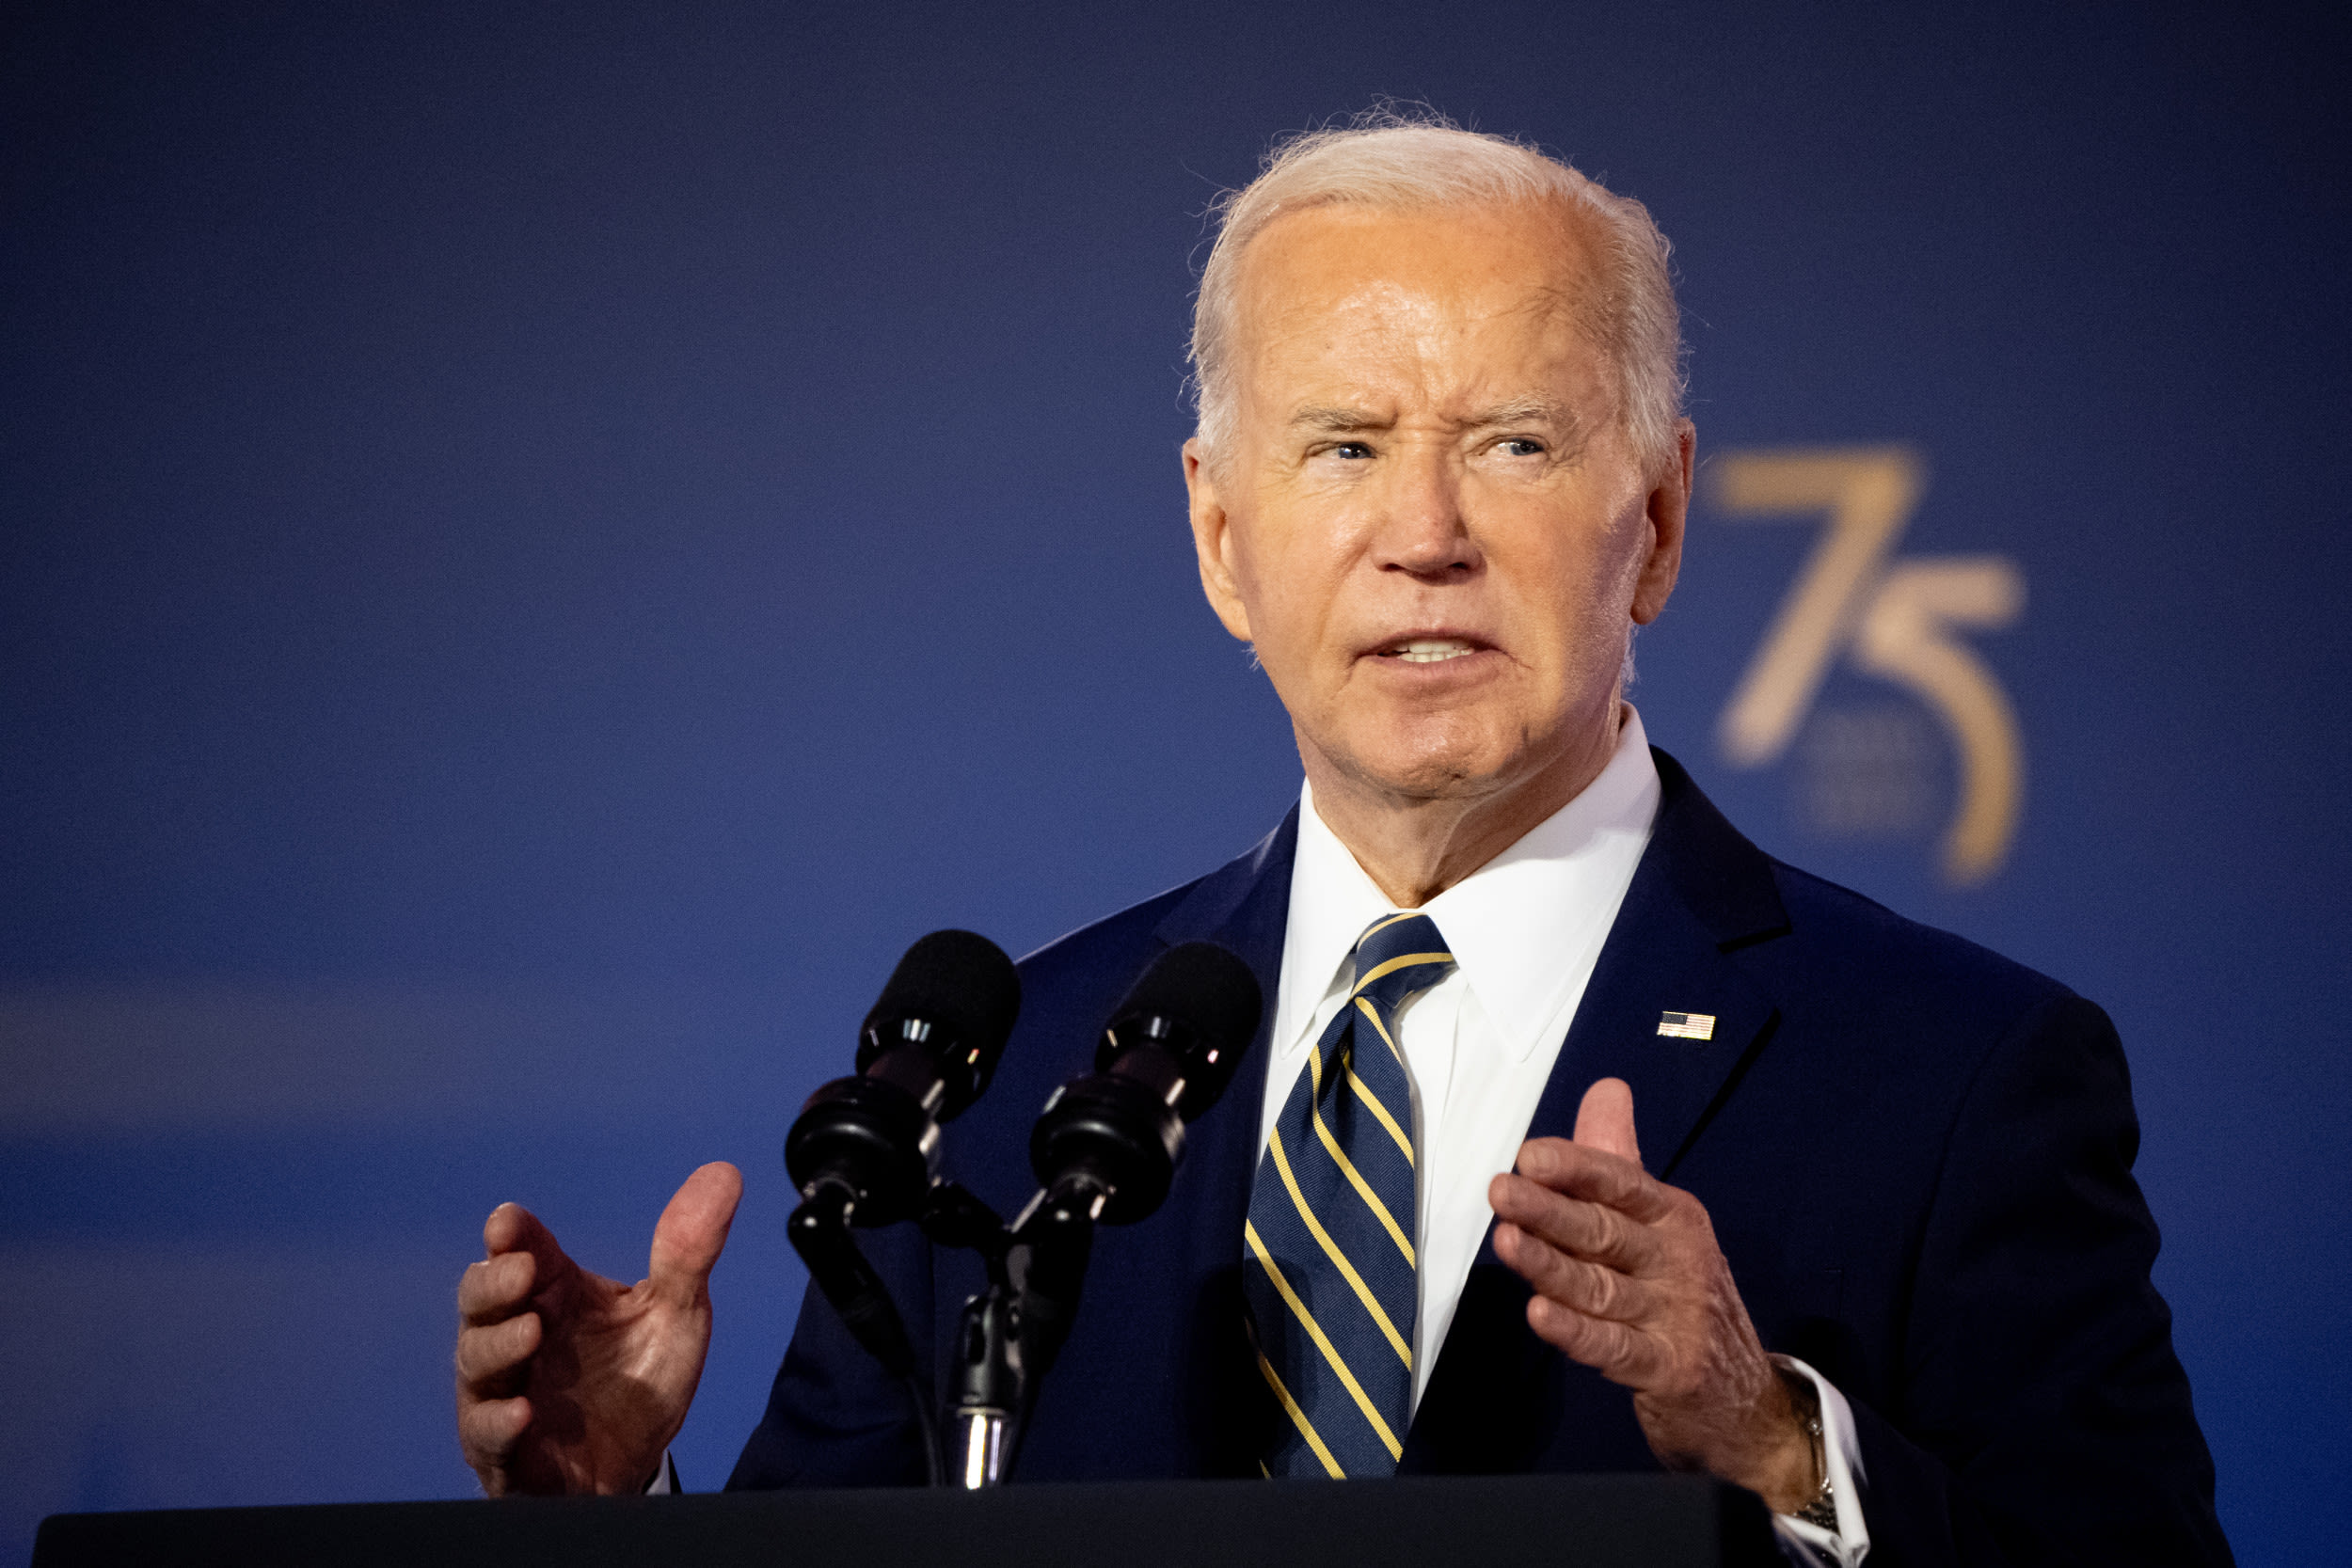 Joe Biden radio interview had 16 seconds removed, station reveals